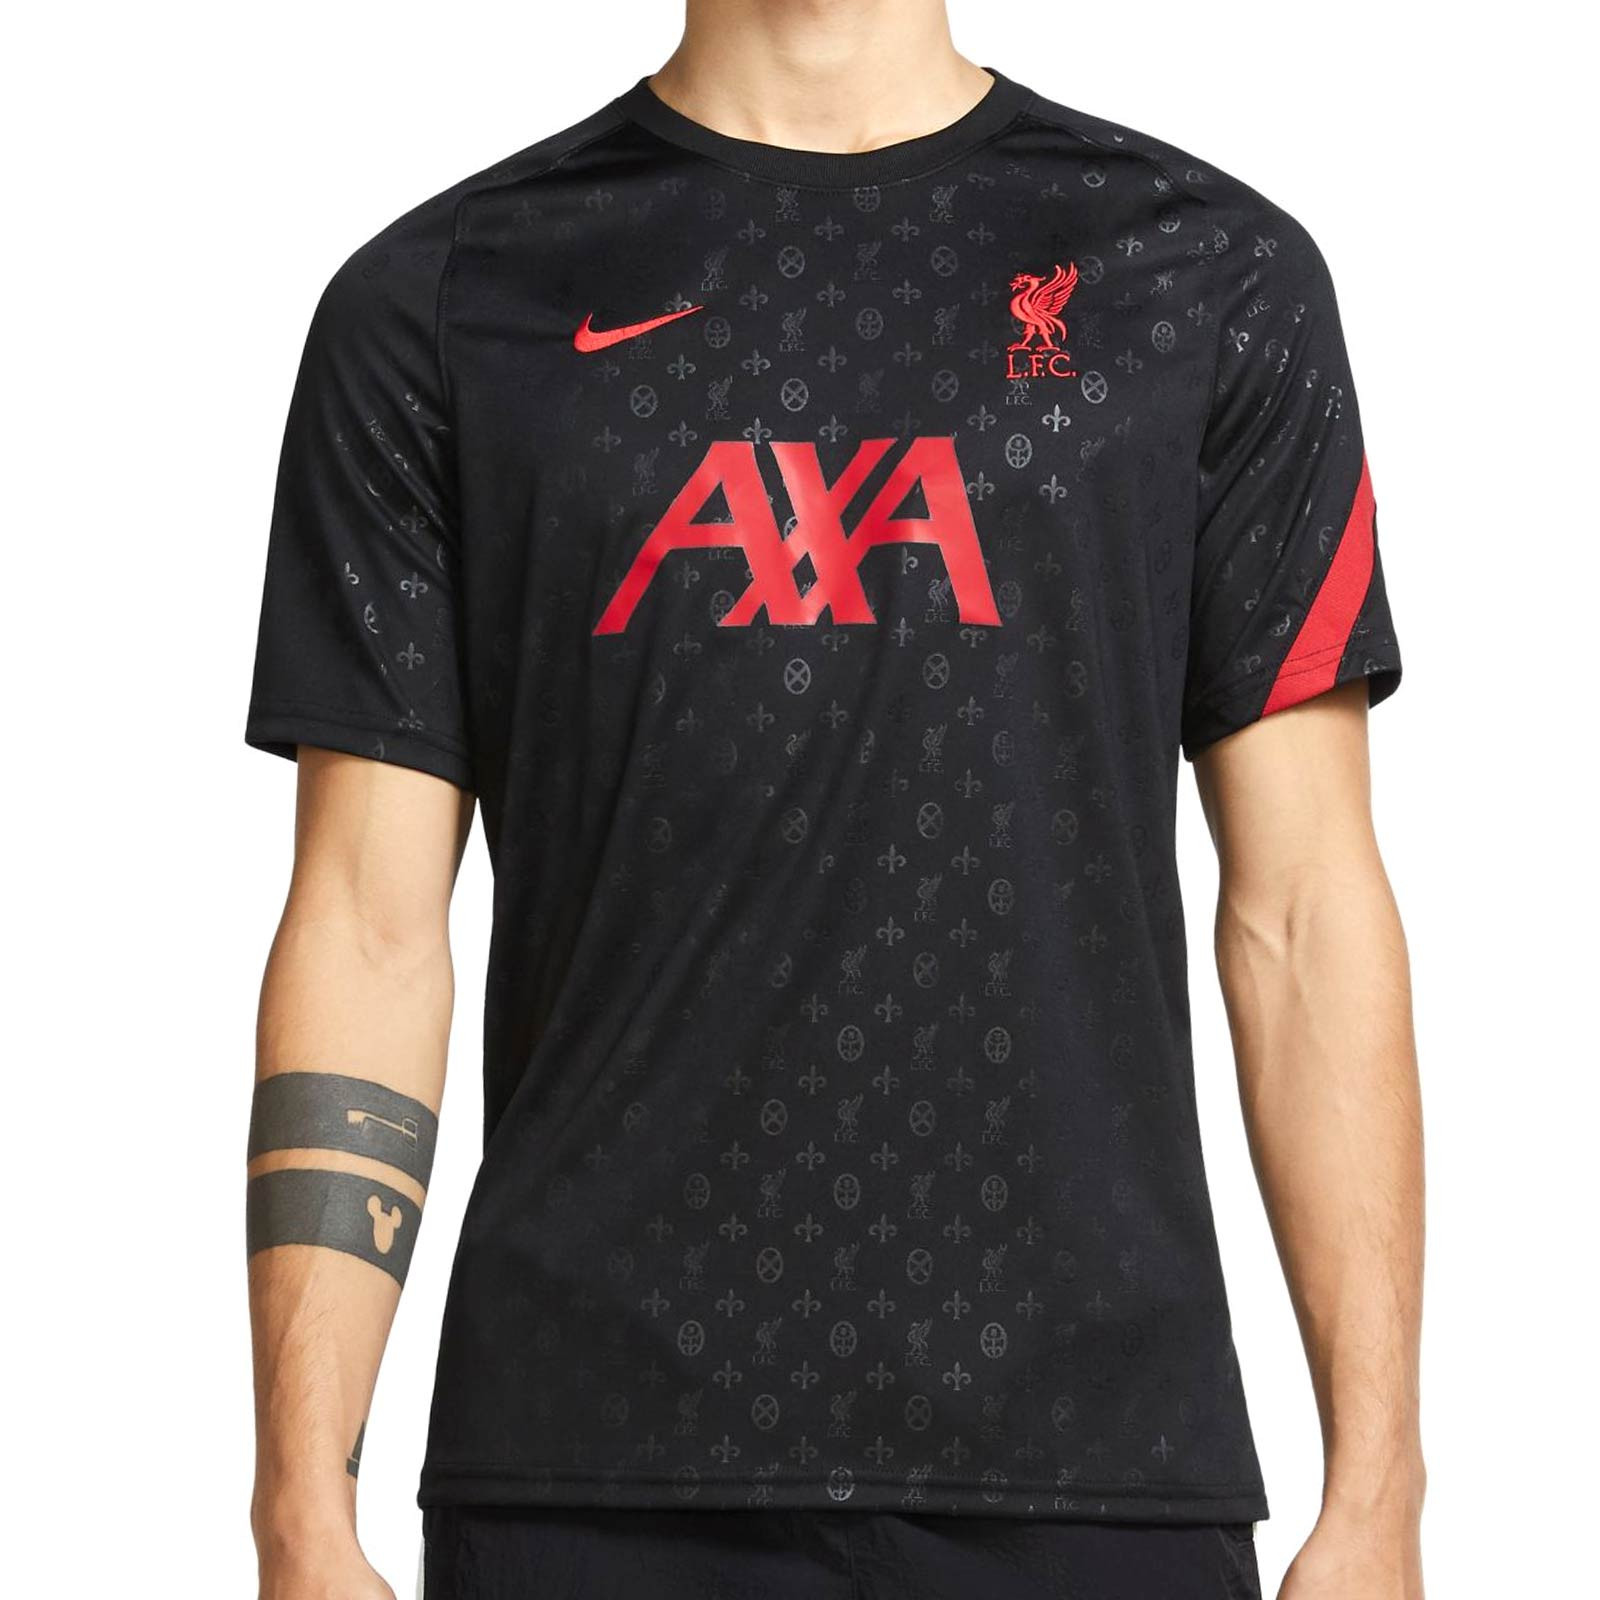 Buy Liverpool Camiseta | UP TO OFF